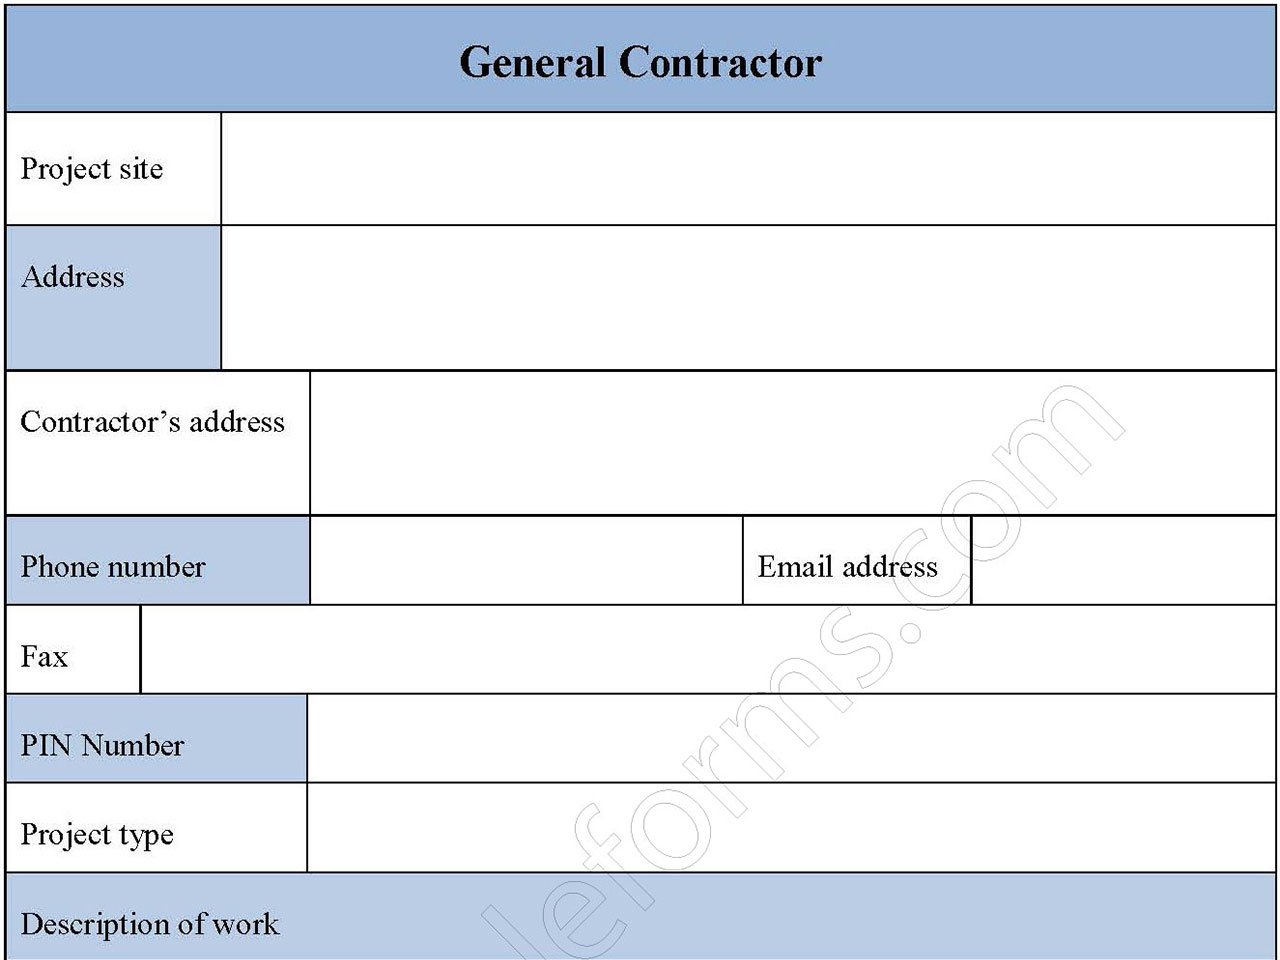 General Contractor Form